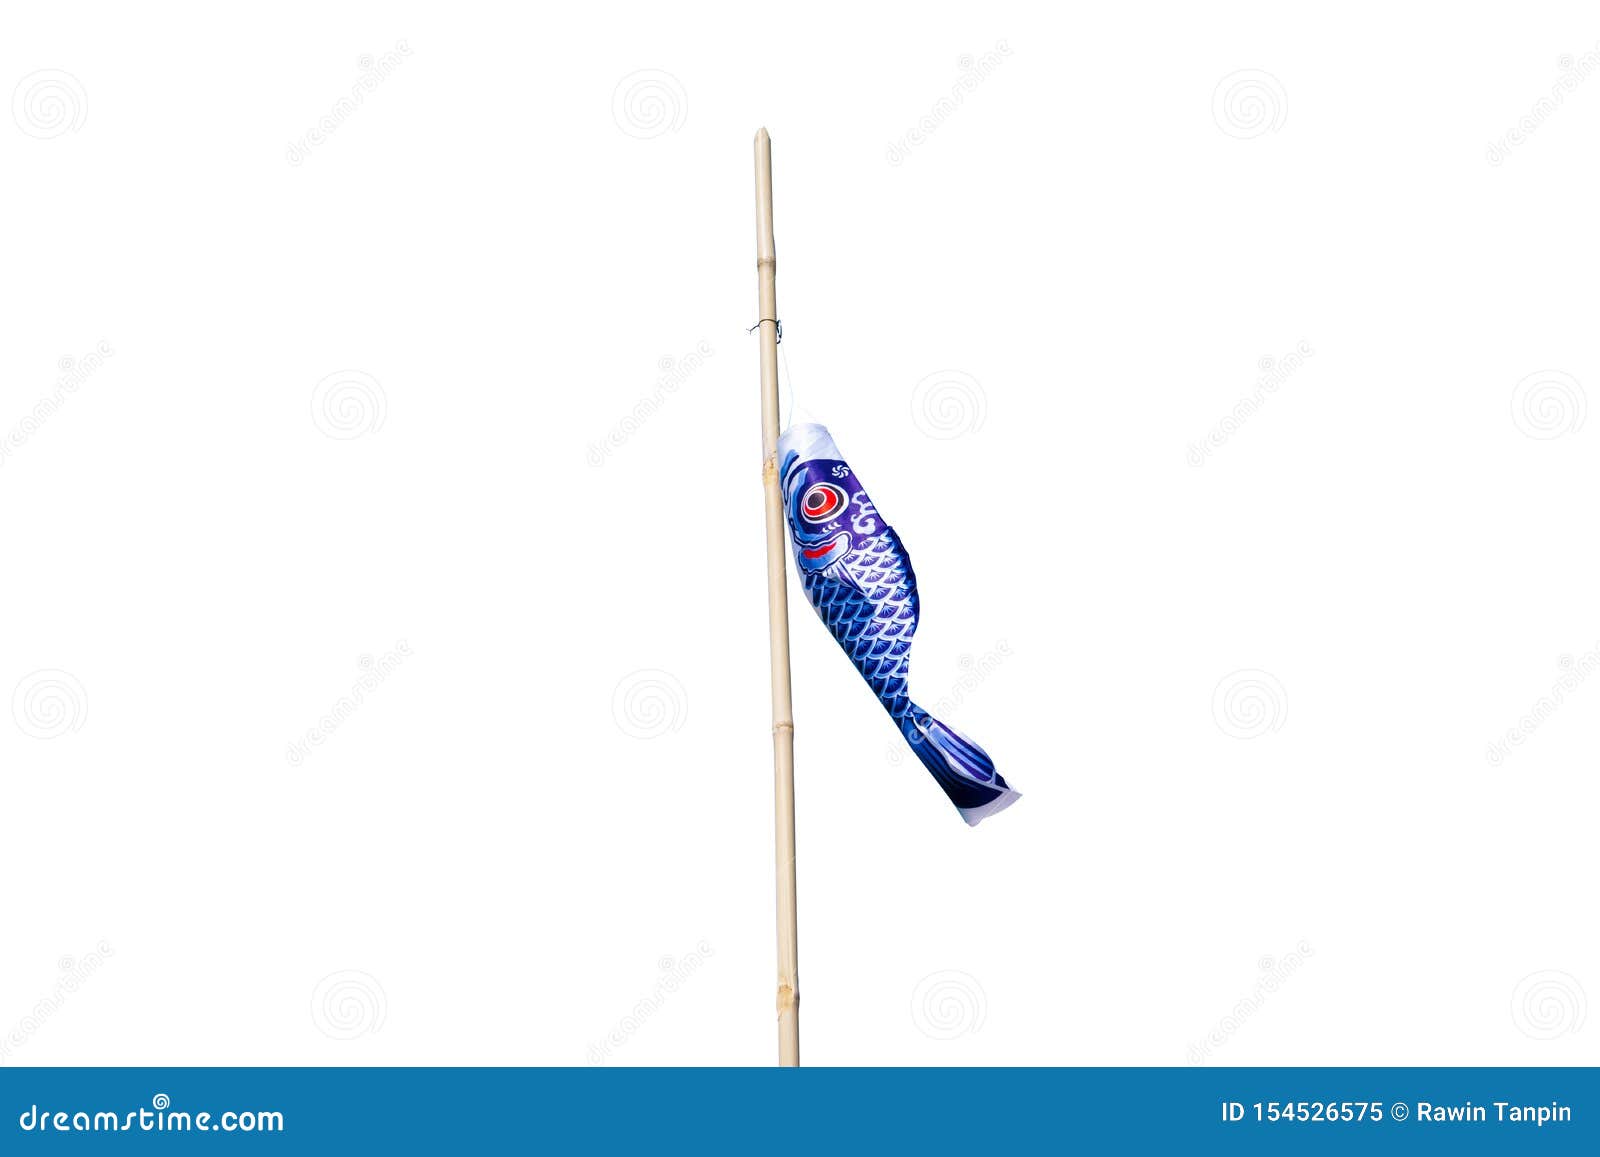 Japanese koi carp flag decoration blow in the wind.koinobori